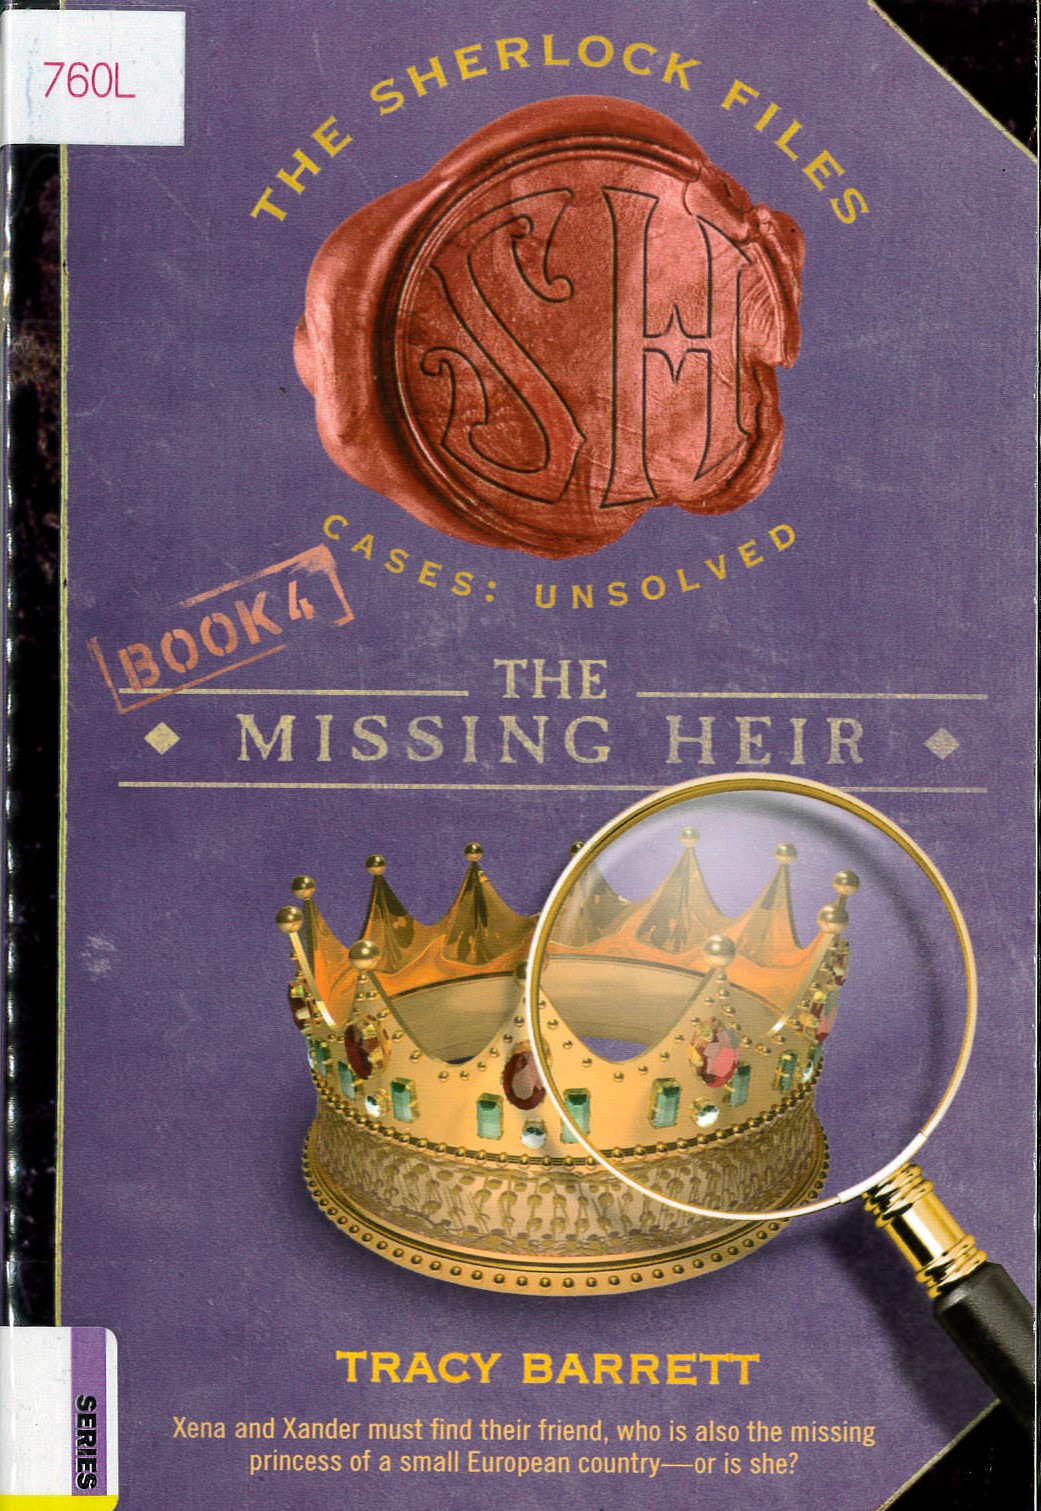 The missing heir /